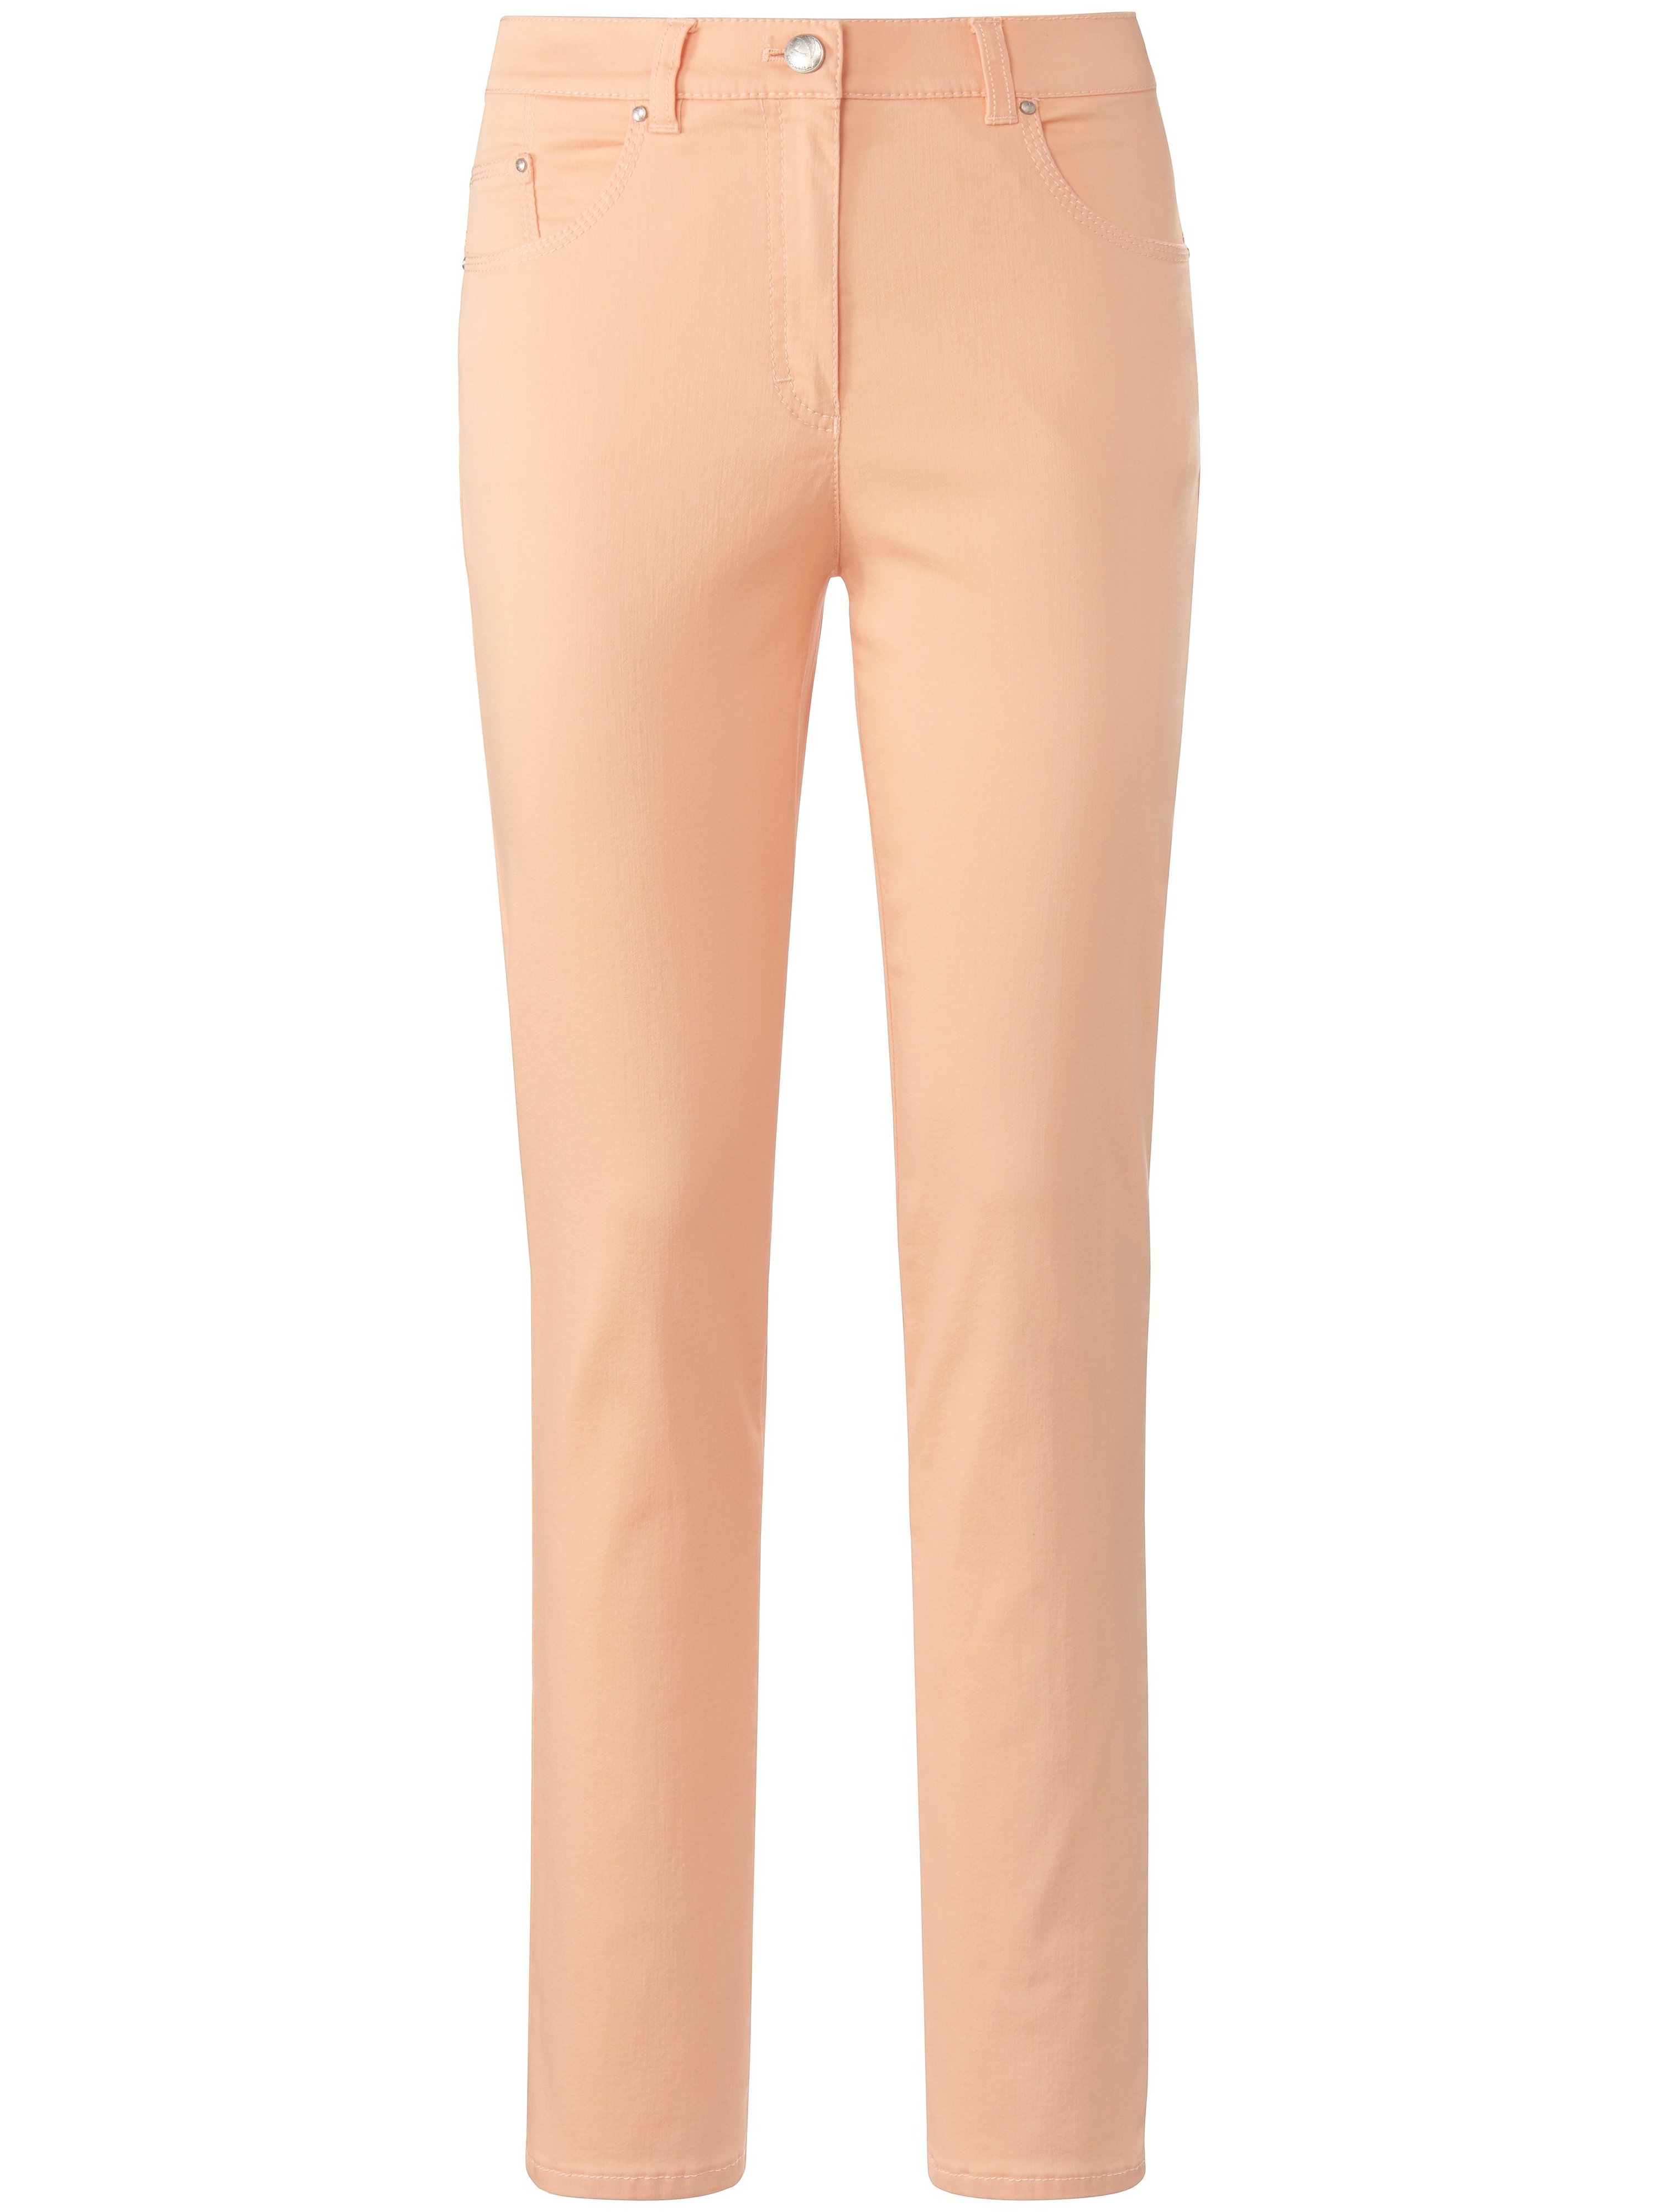 Corrigerende Proform S Super Slim jeans model Lea Van Raphaela by Brax oranje